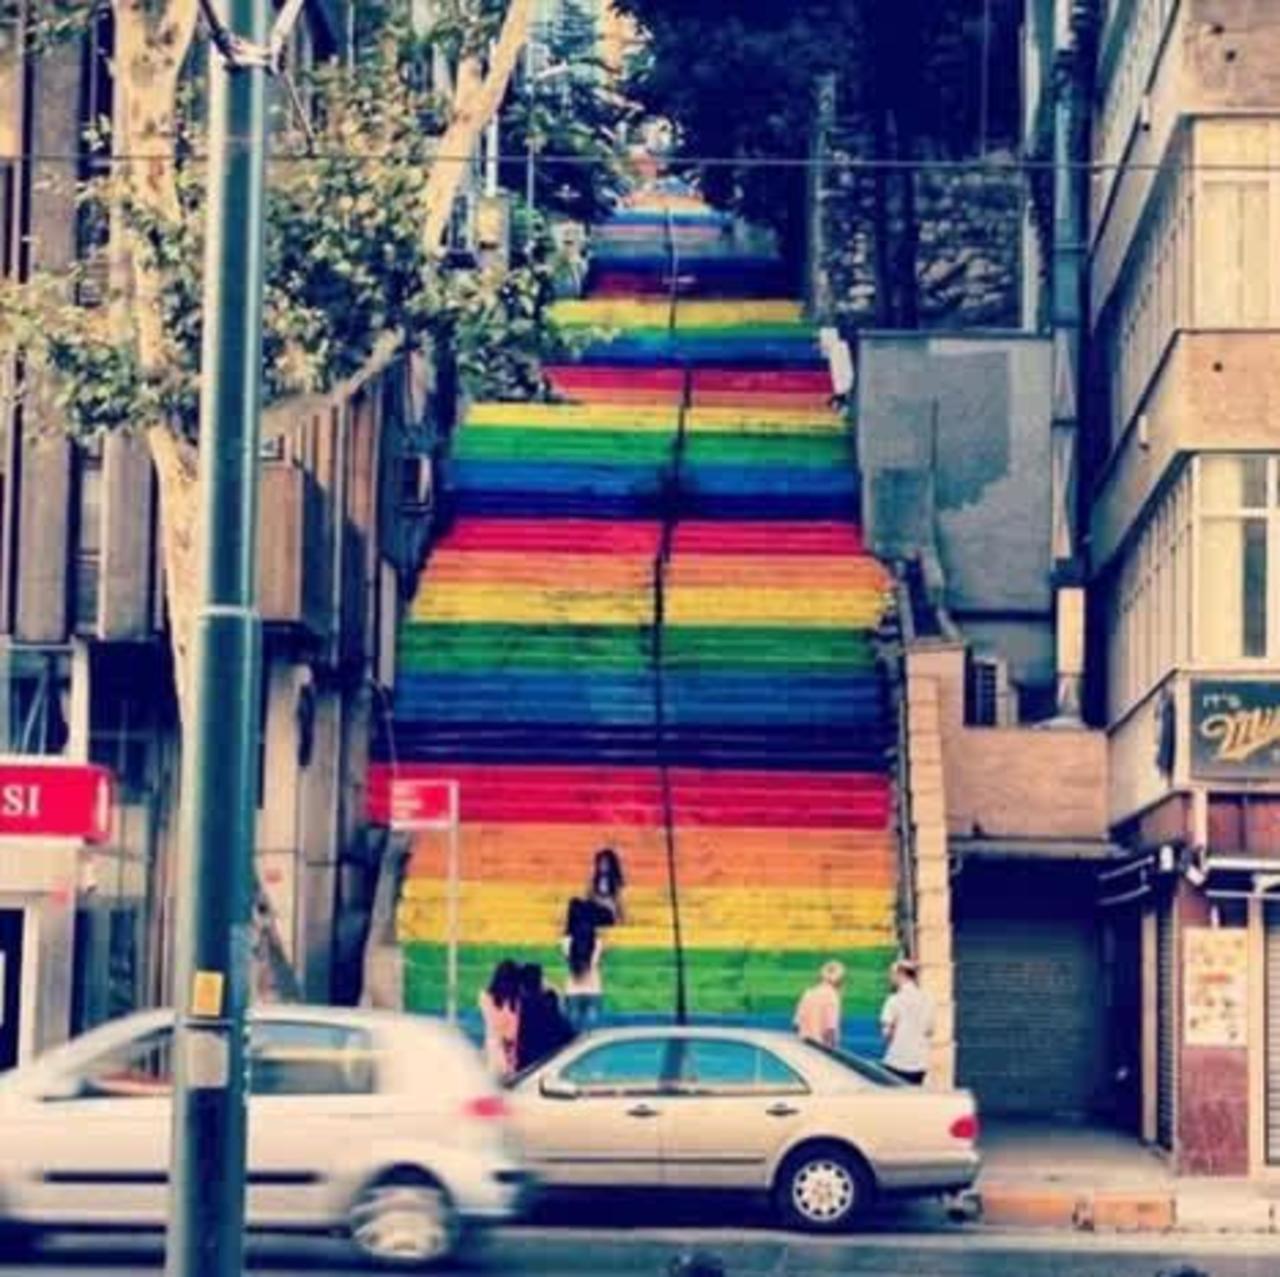 Cool ... "@5putnik1: Rainbow Doorway • #streetart #graffiti #art #funky #dope . : http://t.co/CdTyxa1PnF"